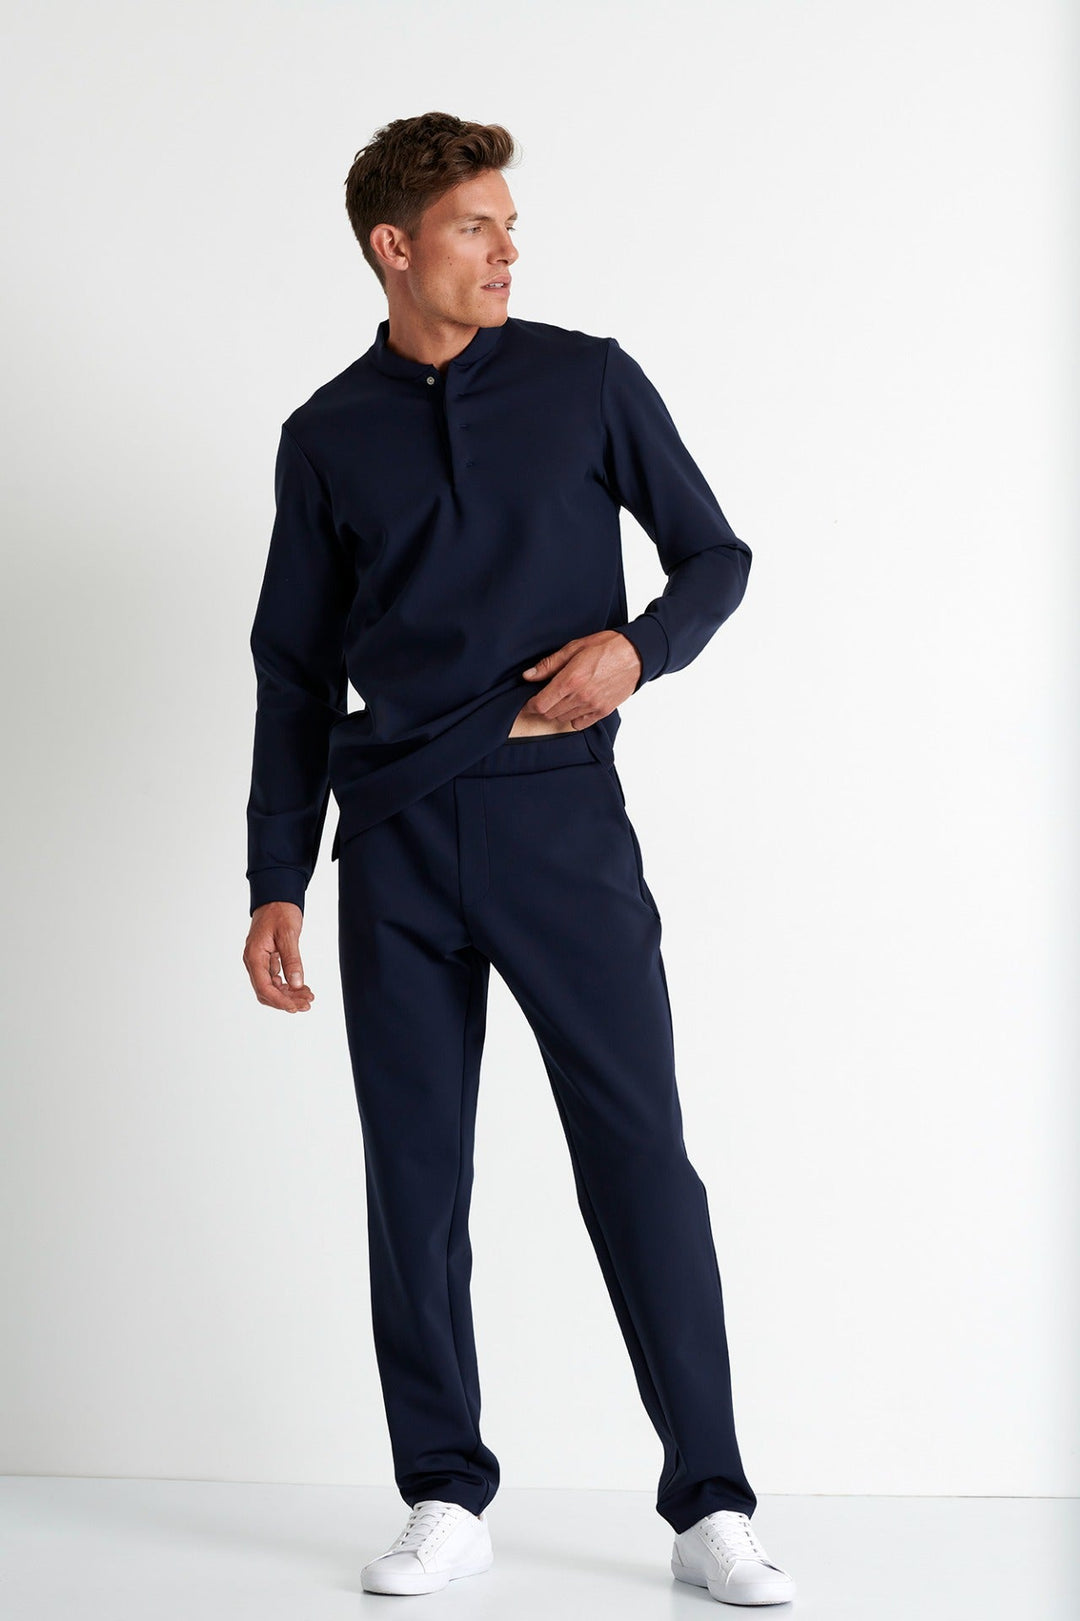 Modern Comfortable 3D Jersey Pants - 62267-44-590 S / 590 Navy / 75% POLYAMIDE, 25% ELASTANE